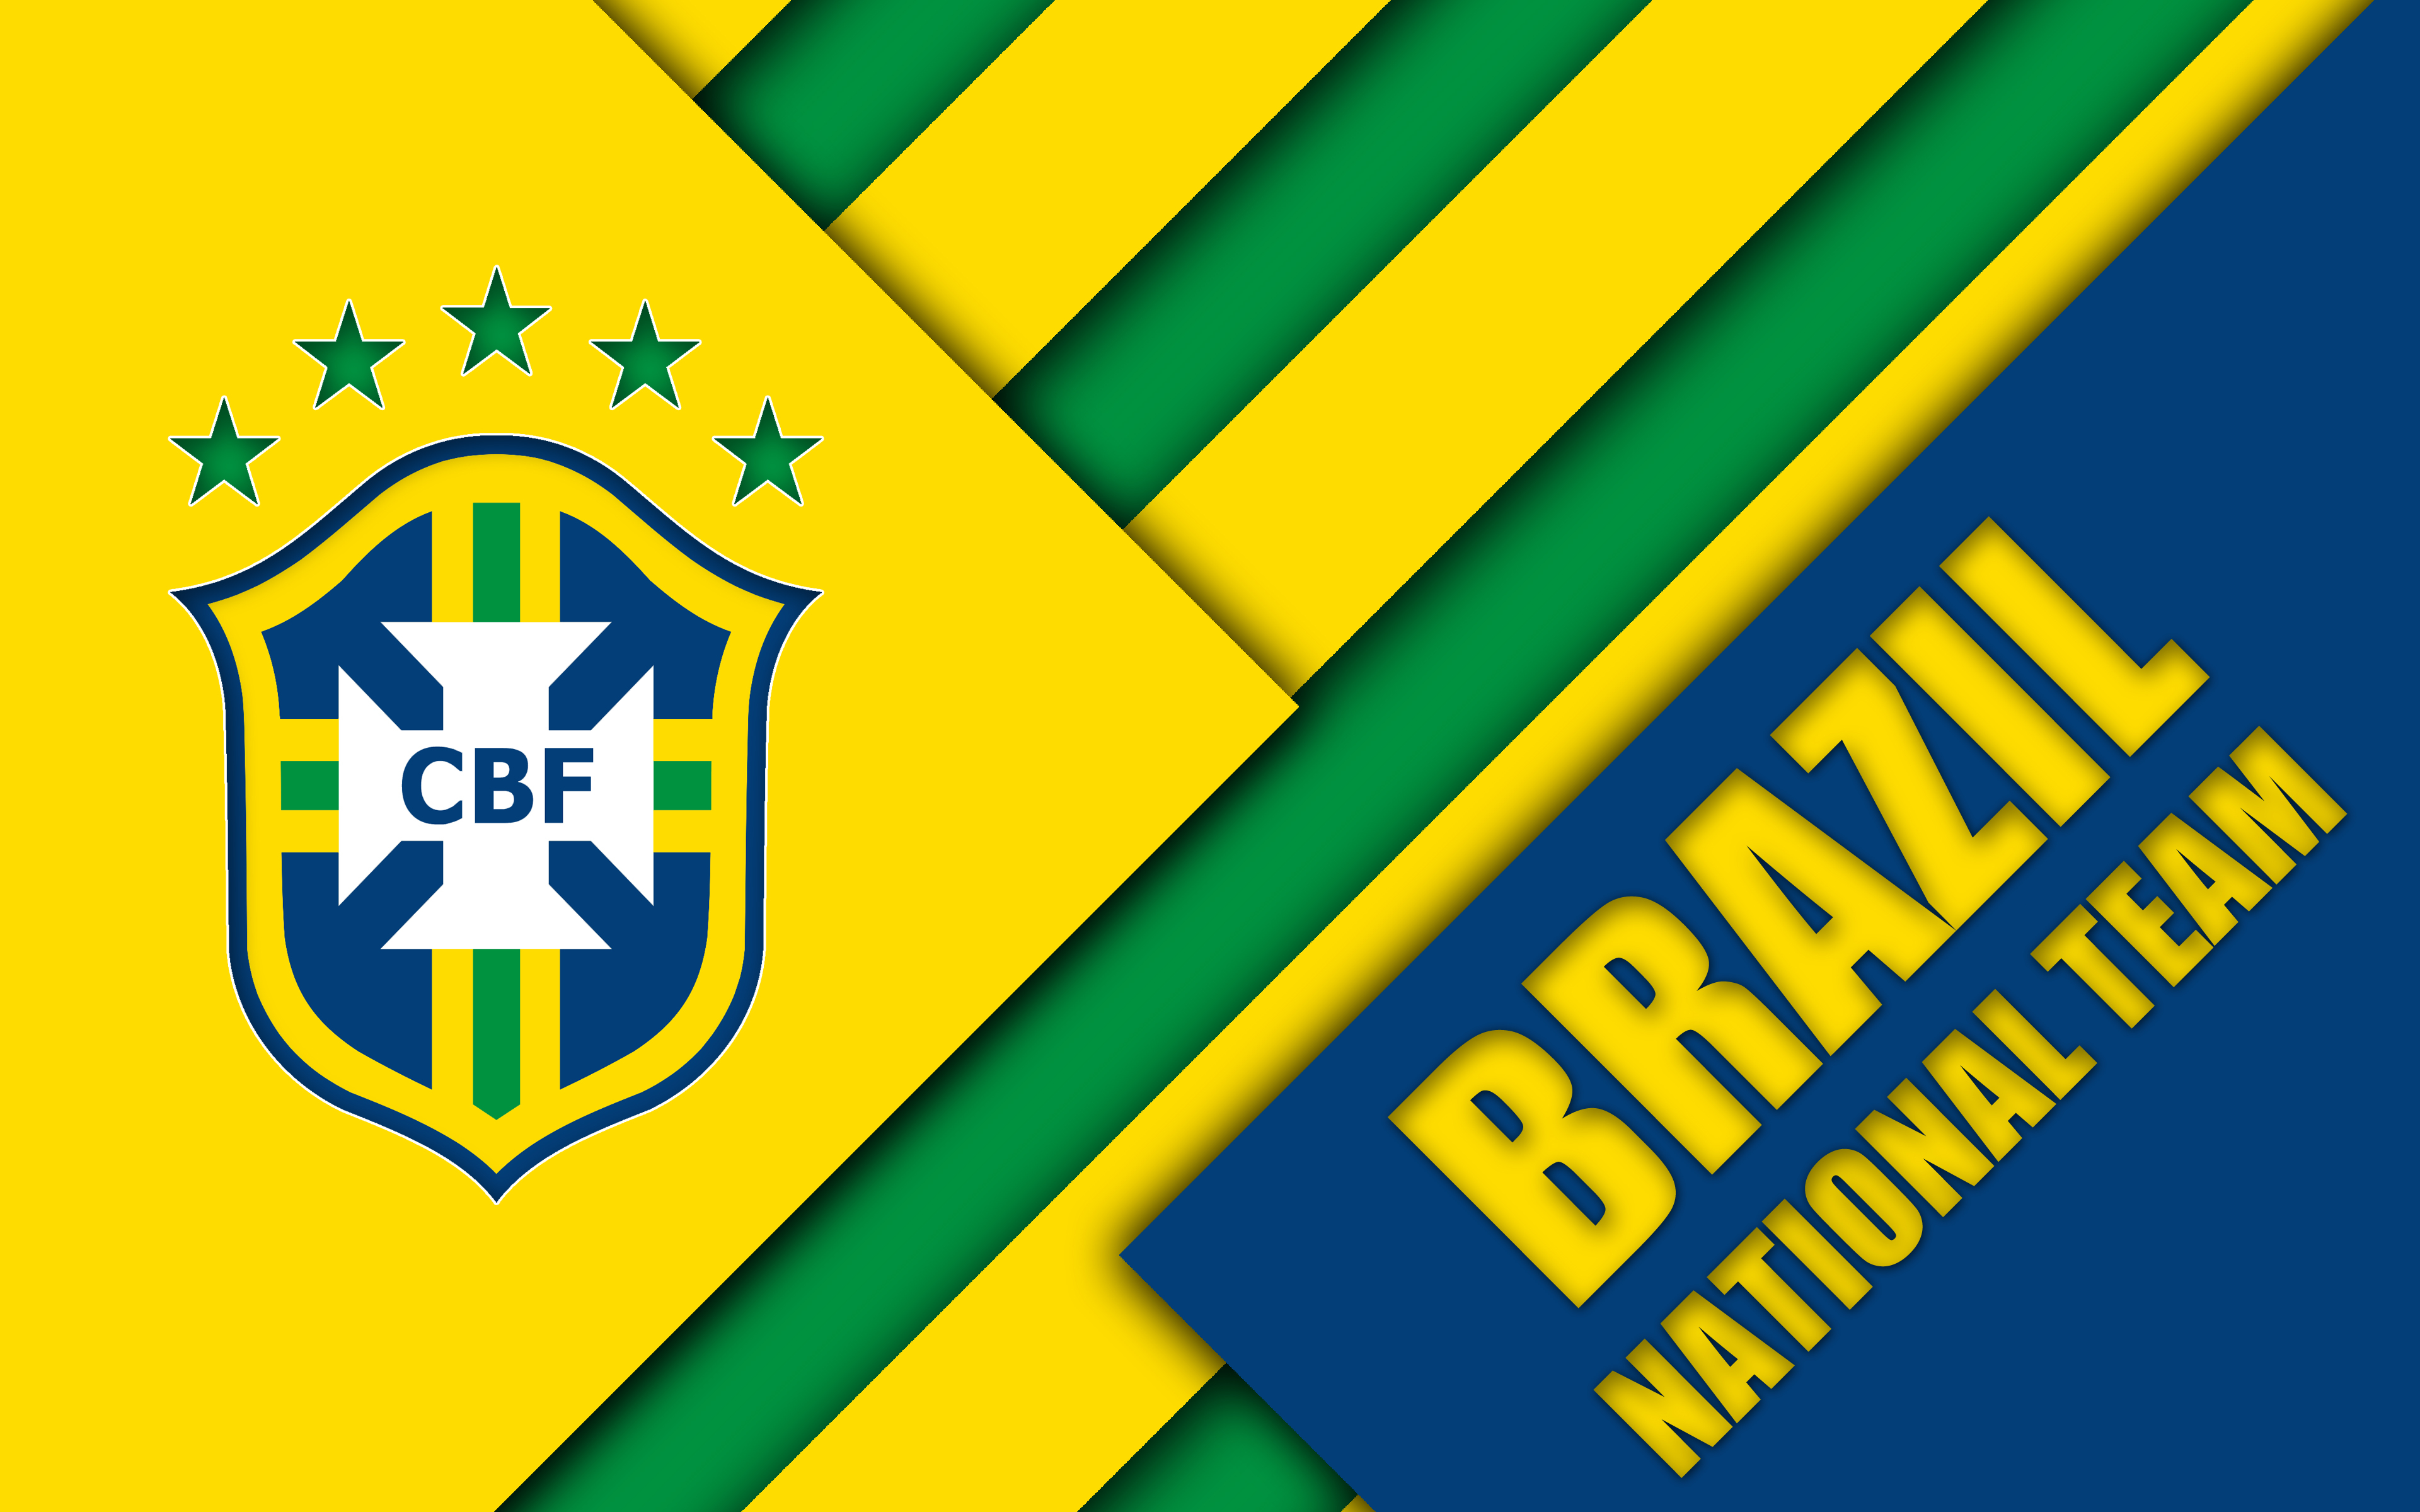 451671 descargar imagen deporte, selección de fútbol de brasil, brasil, emblema, logo, fútbol: fondos de pantalla y protectores de pantalla gratis